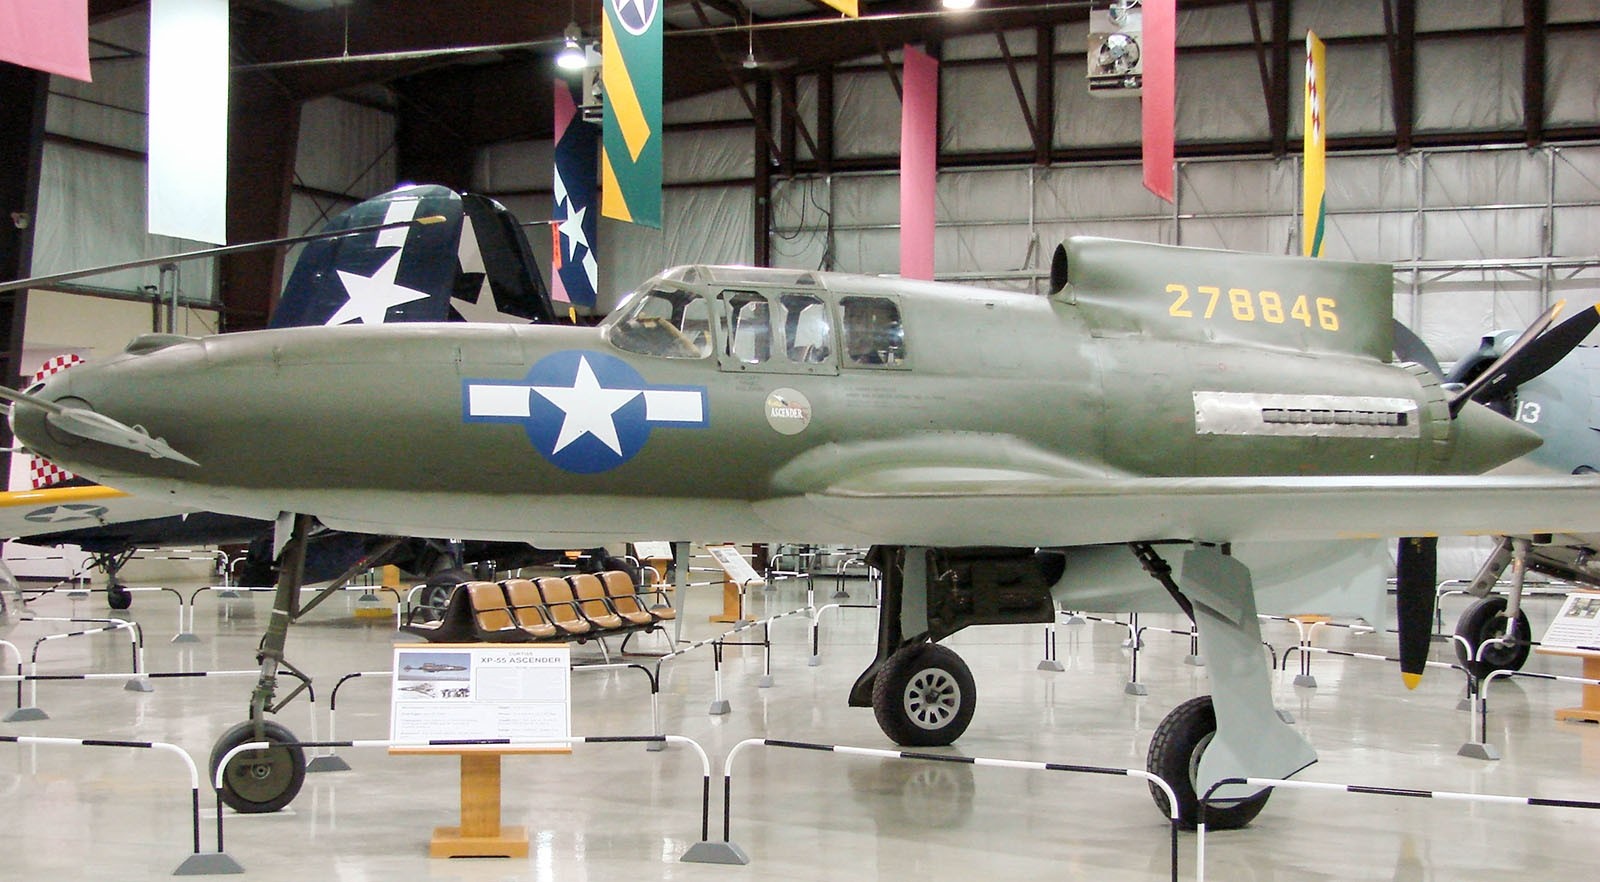 XP-55 Stigende